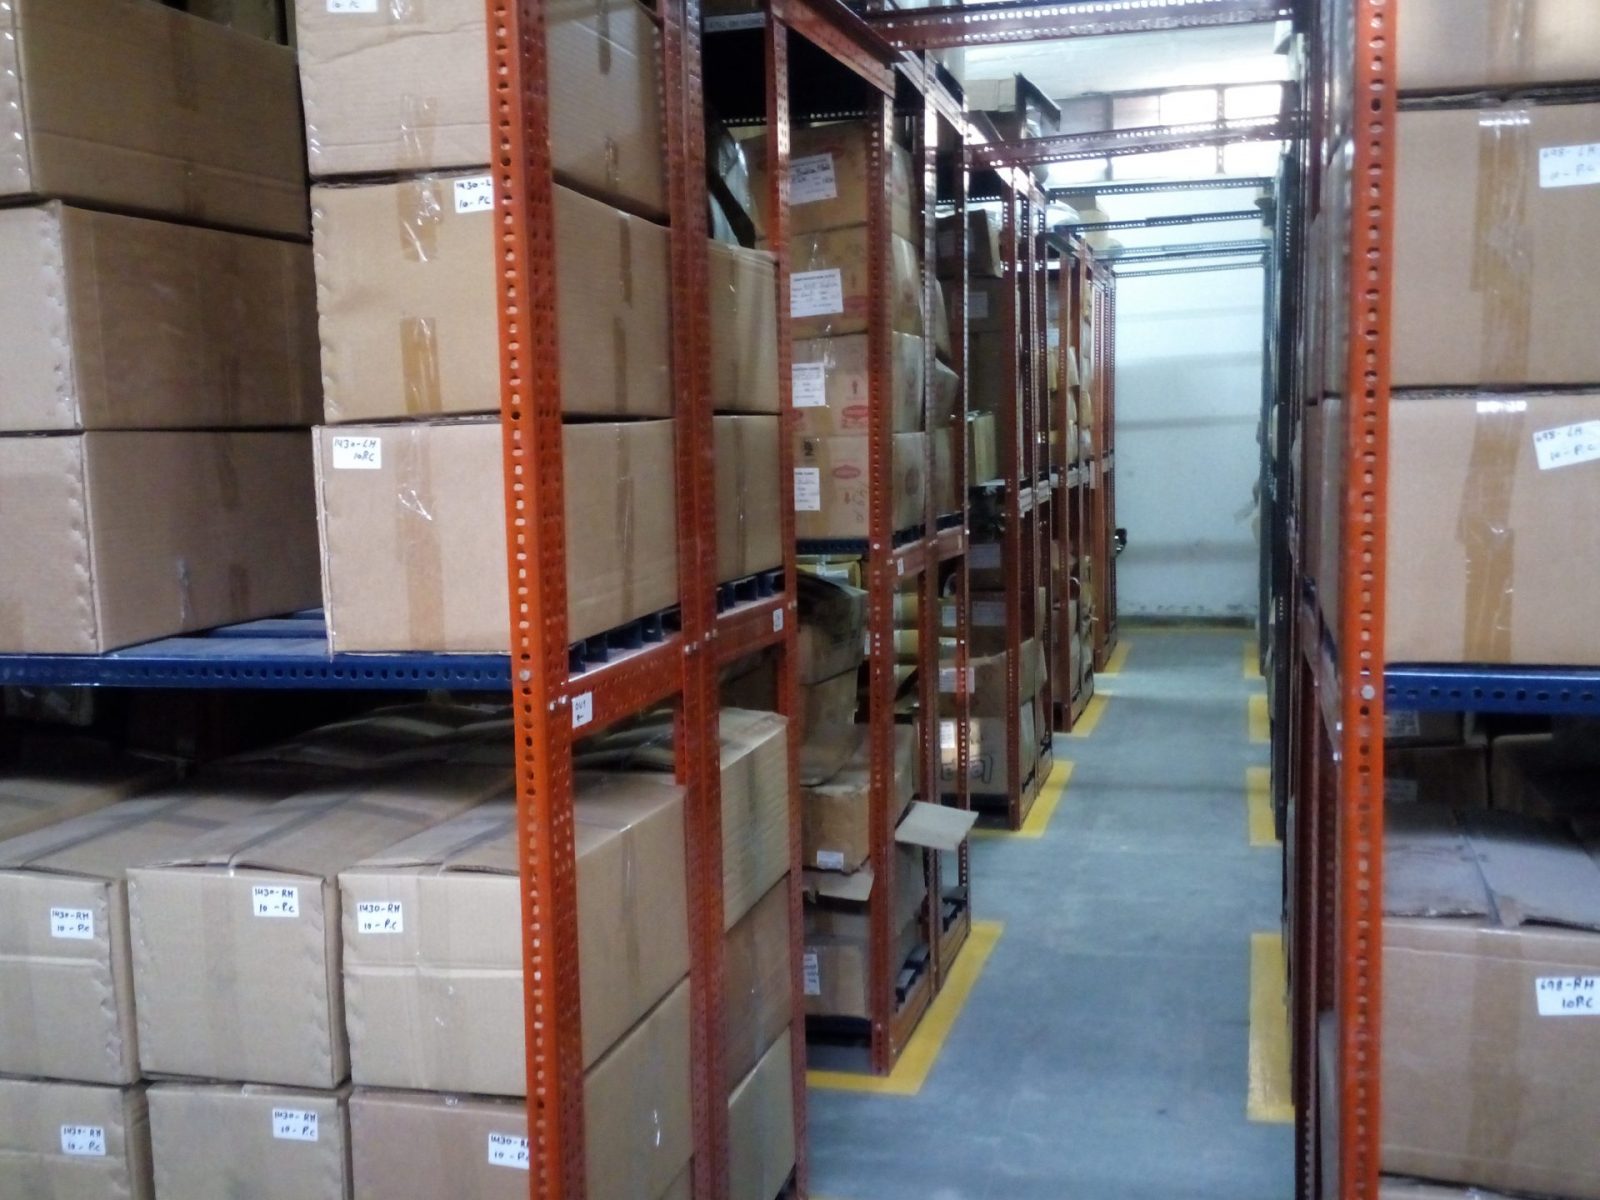 Slotted angle warehouse racks